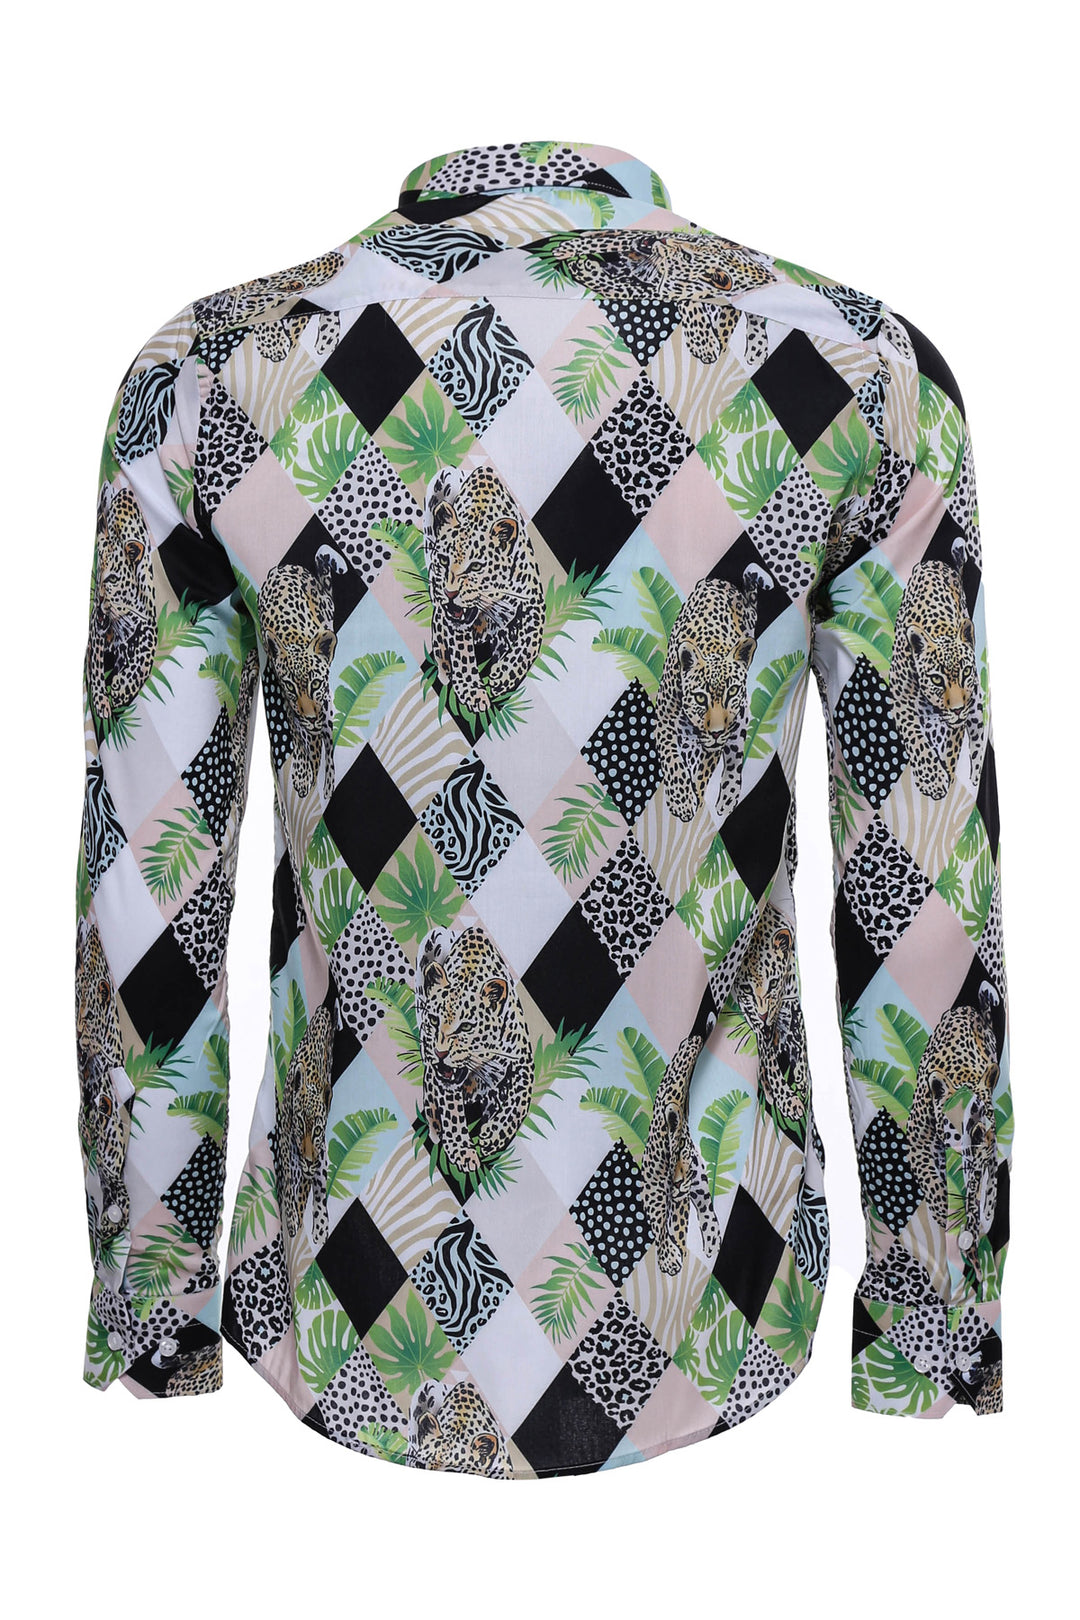 Leopard Pattern Long Sleeves Multicolor Men Shirt - Wessi